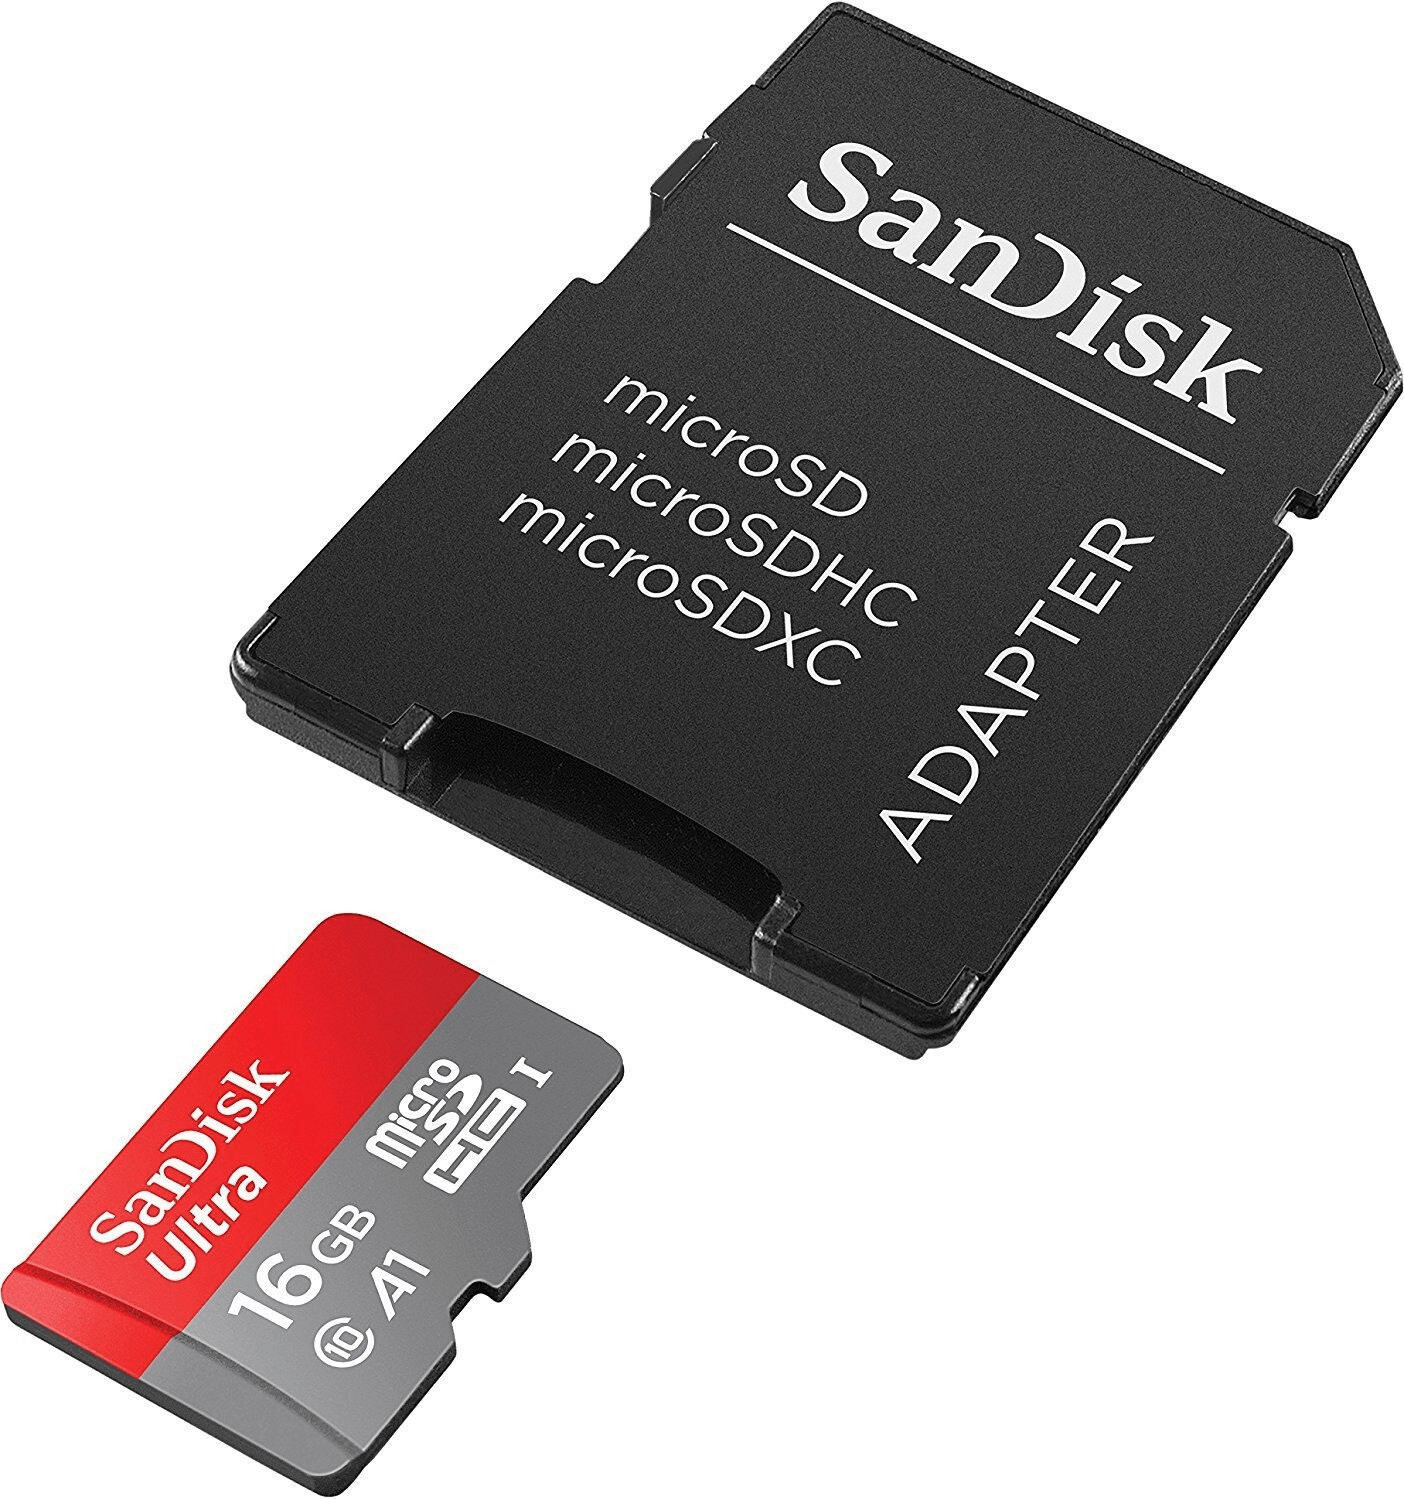 Carte SDHC SanDisk 16 Go 